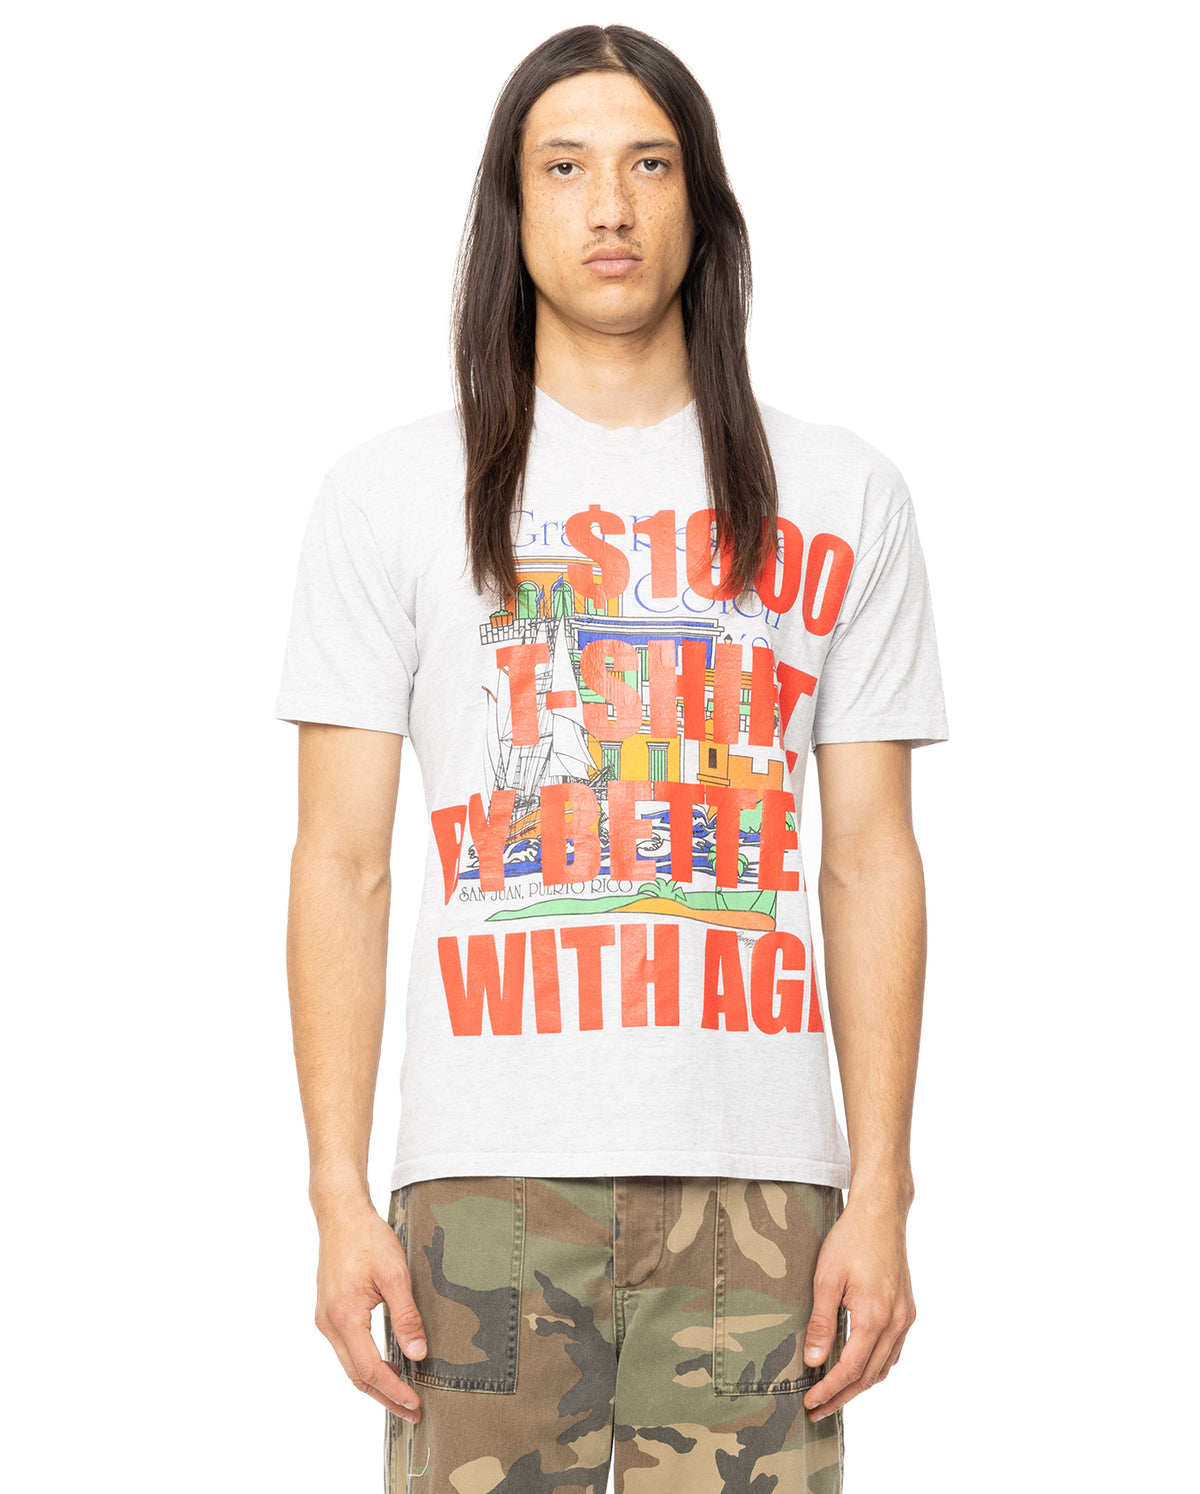 Better With Age - $1000 T-Shirt - San Juan